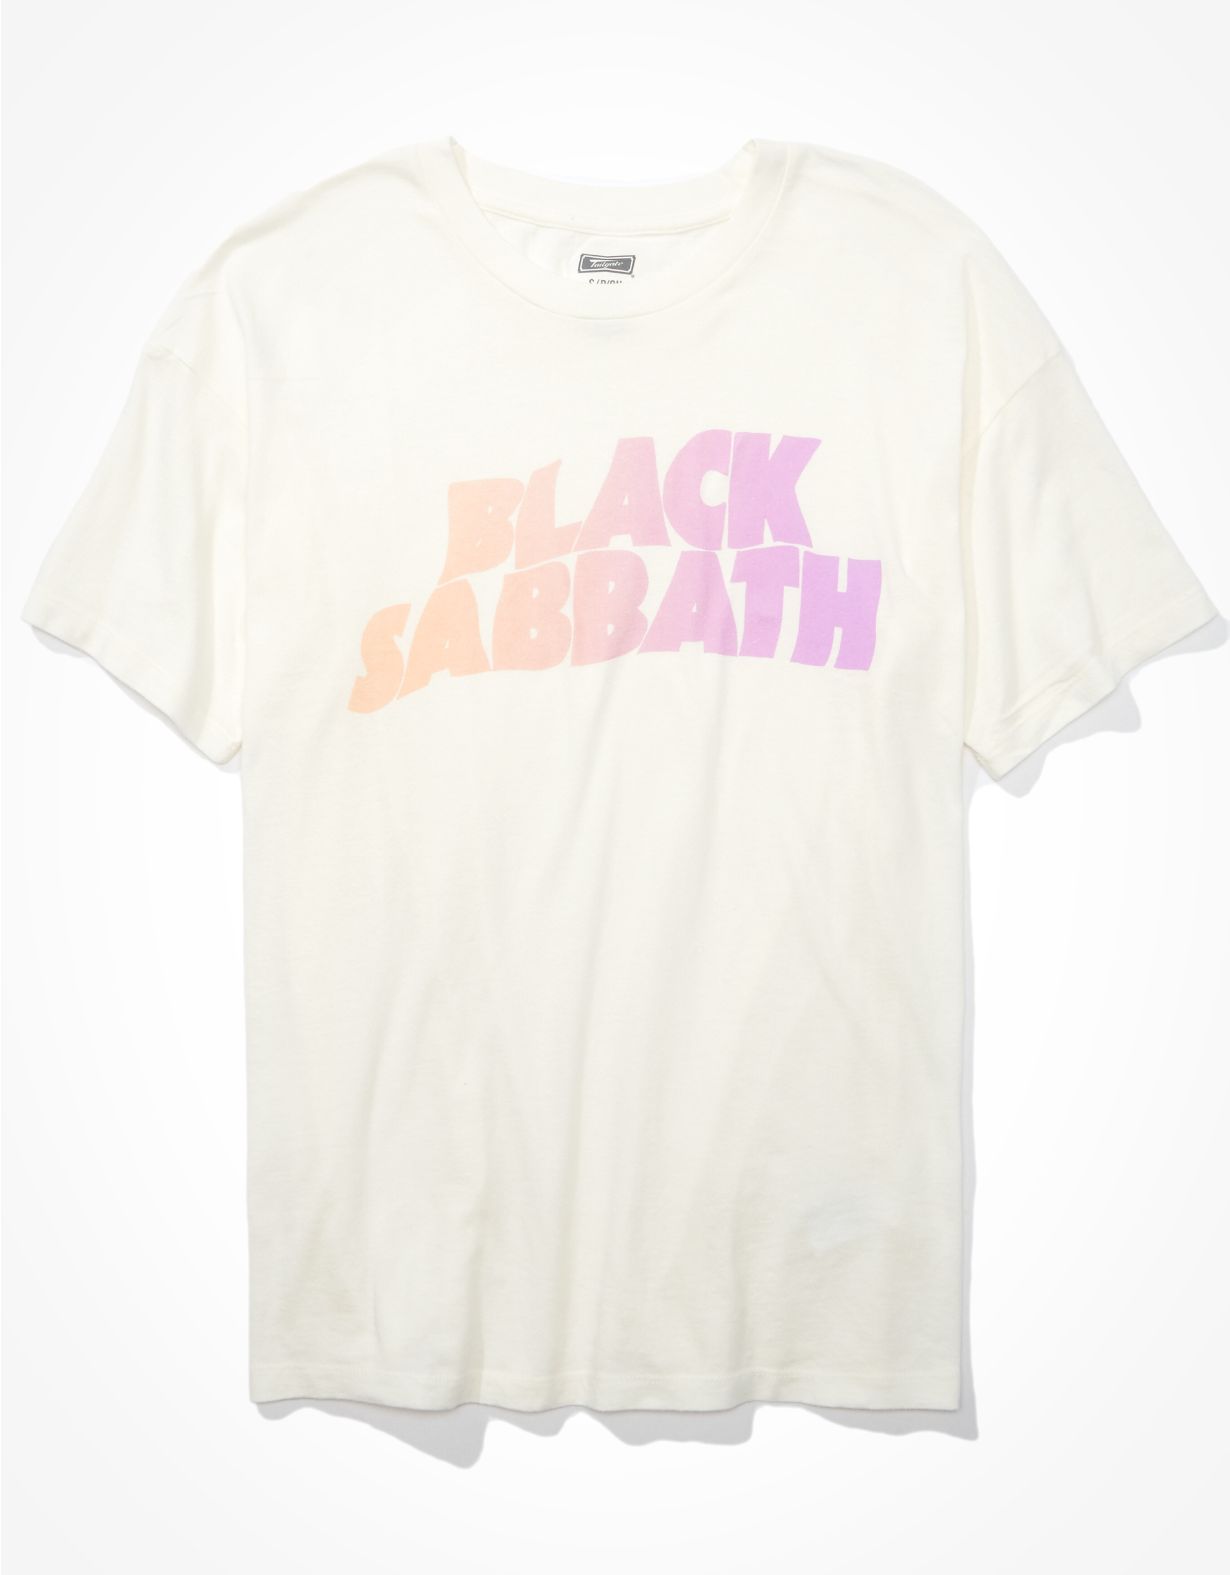 Tailgate Women's Black Sabbath Oversized Graphic T-Shirt